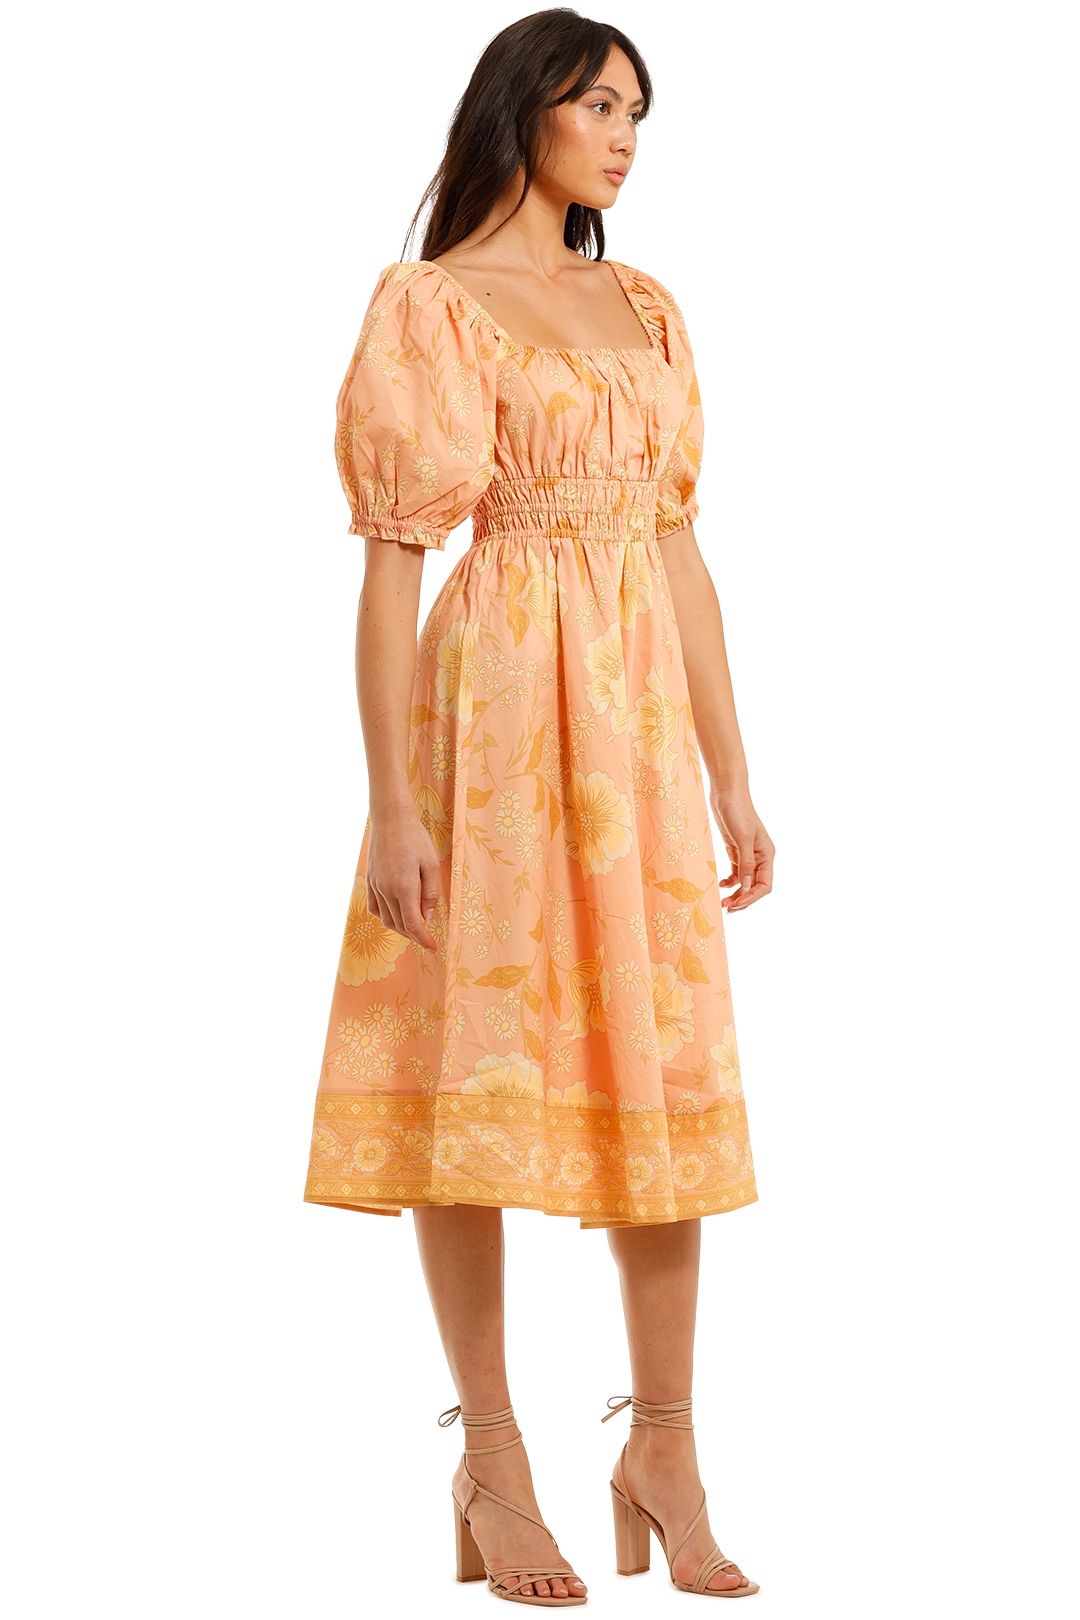 Spell Sloan Soiree Dress Peach Floral